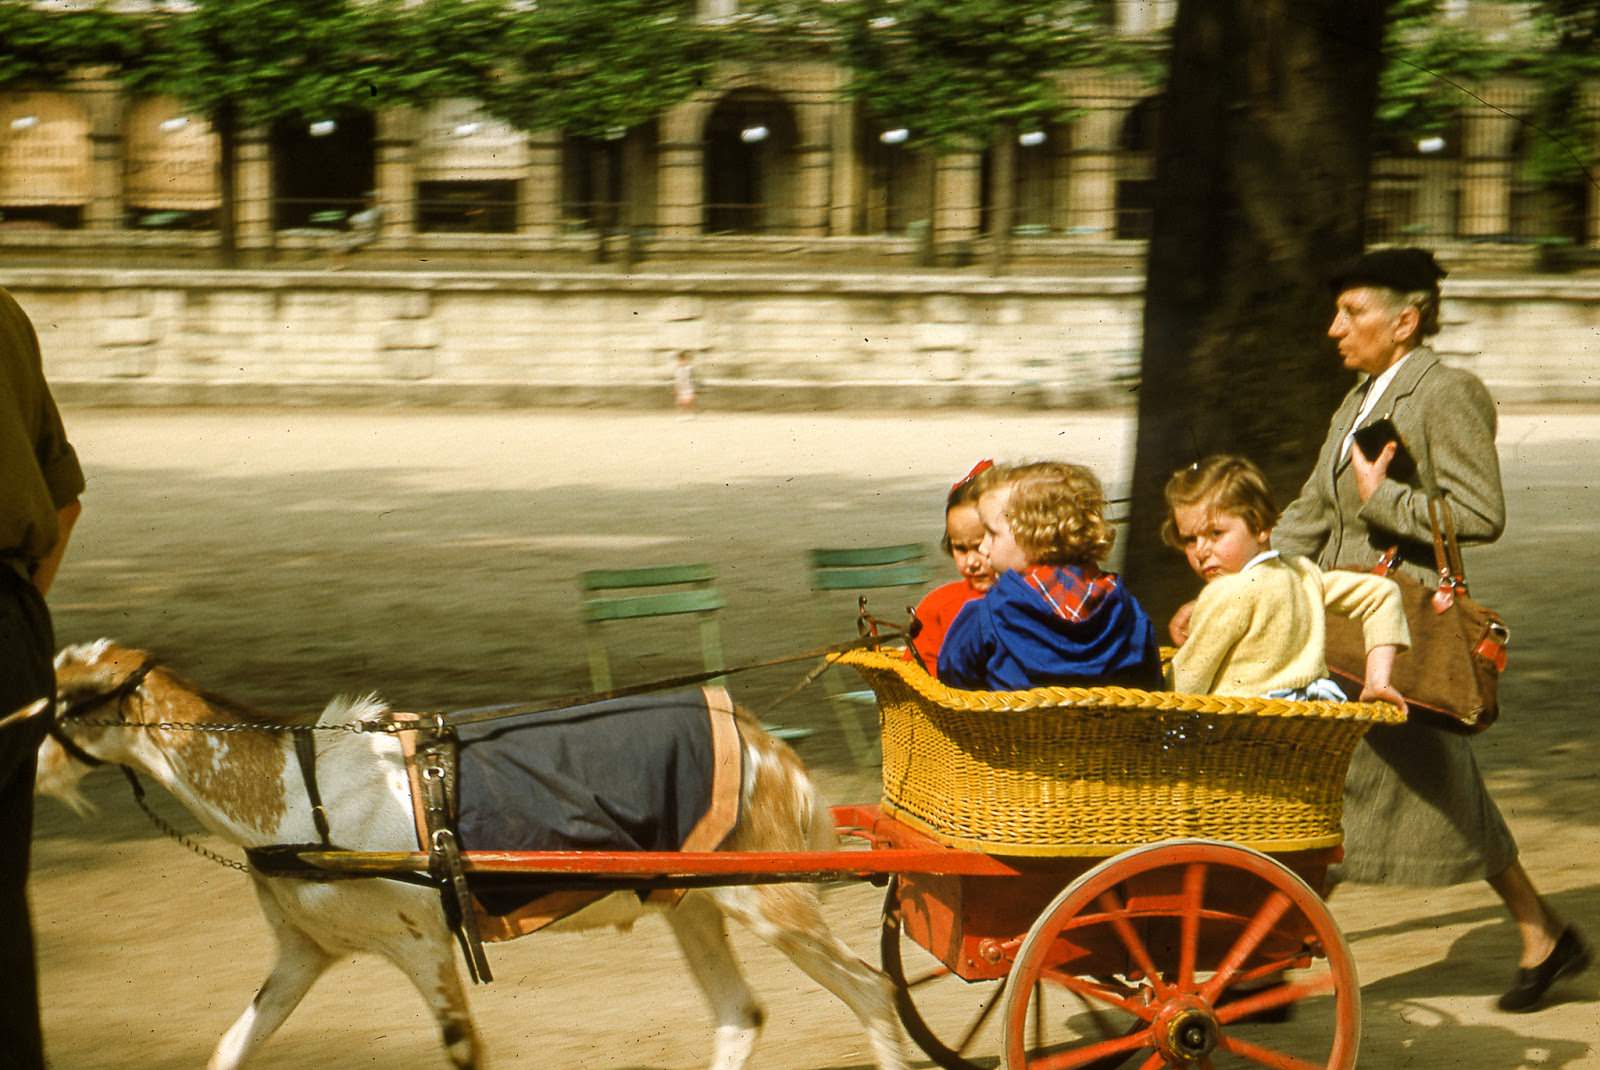 In the Jardin des Tuileries, 1960s